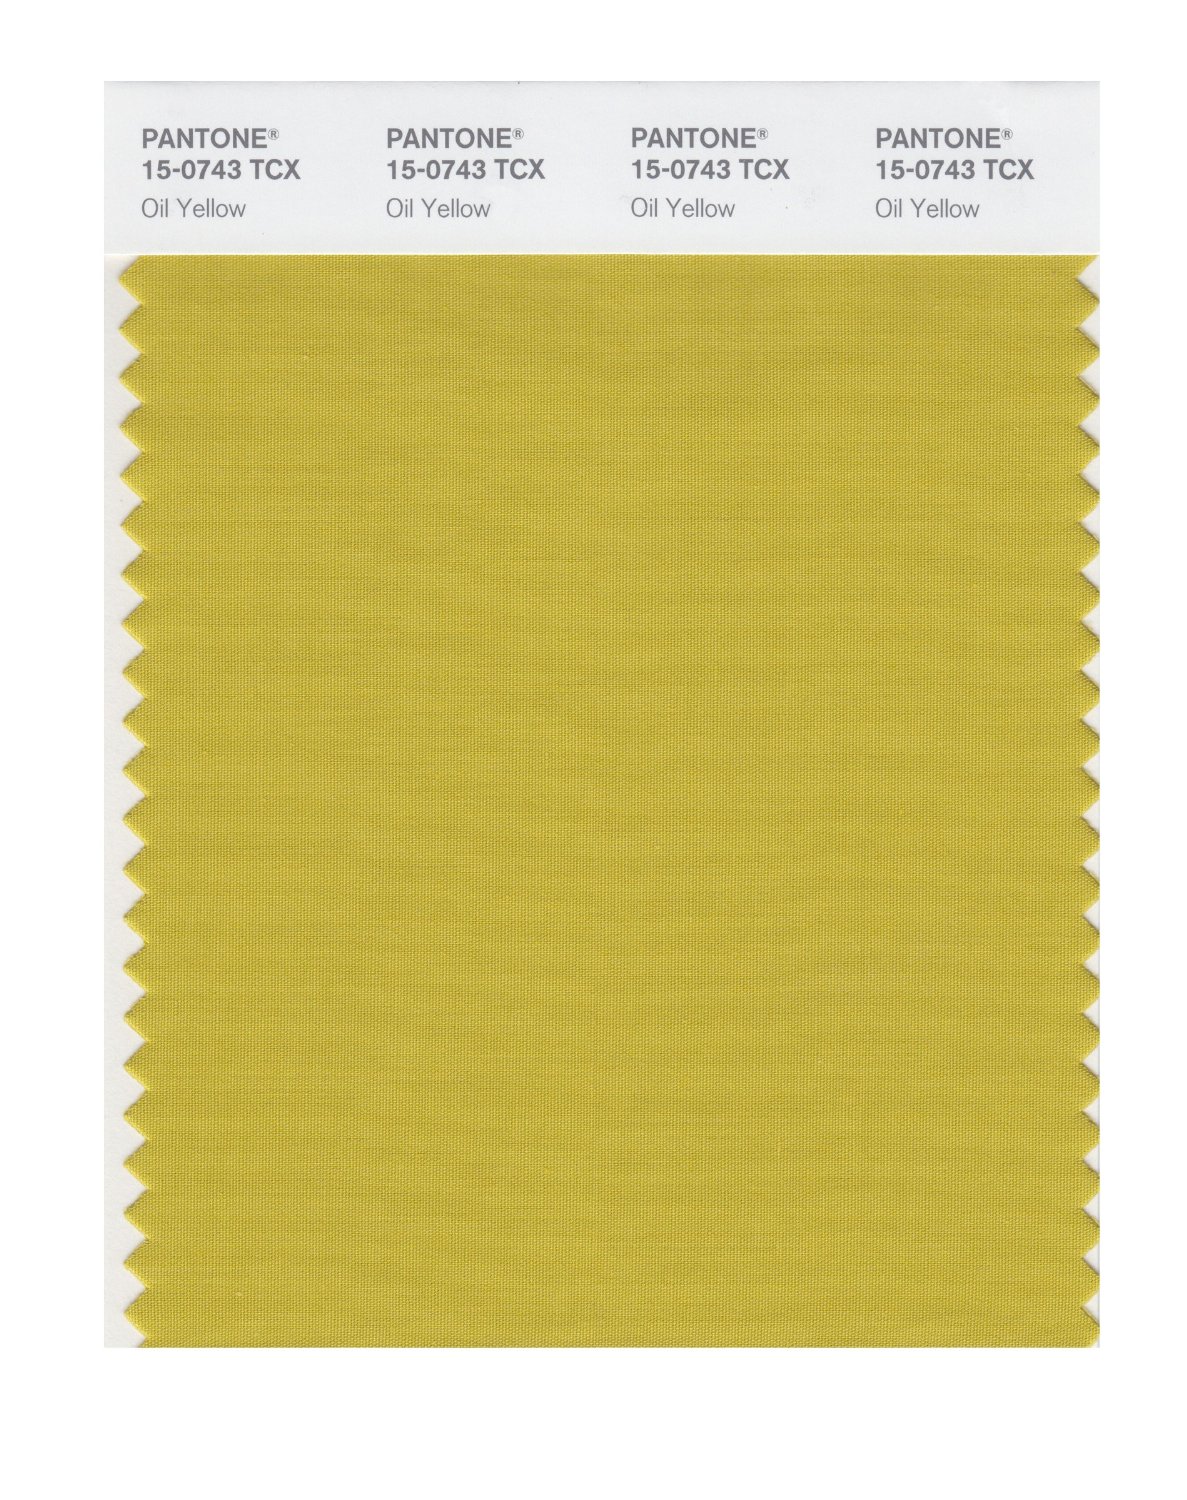 Pantone Cotton Swatch 15-0743 Oil Yellow